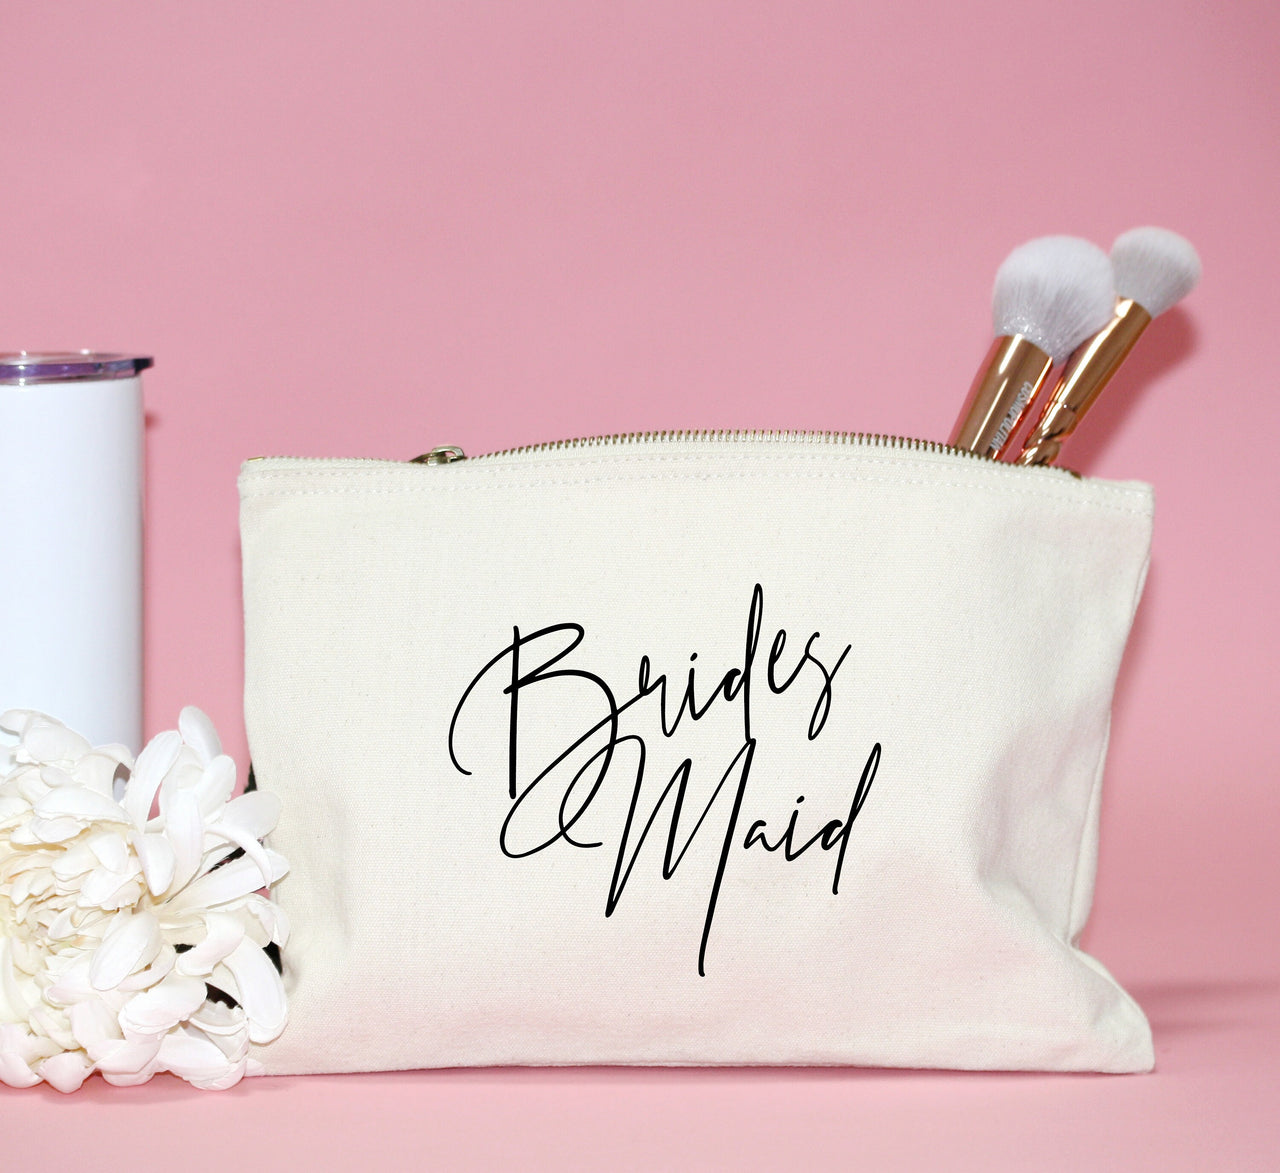 Personalized Makeup Bag - Makeup Brushes